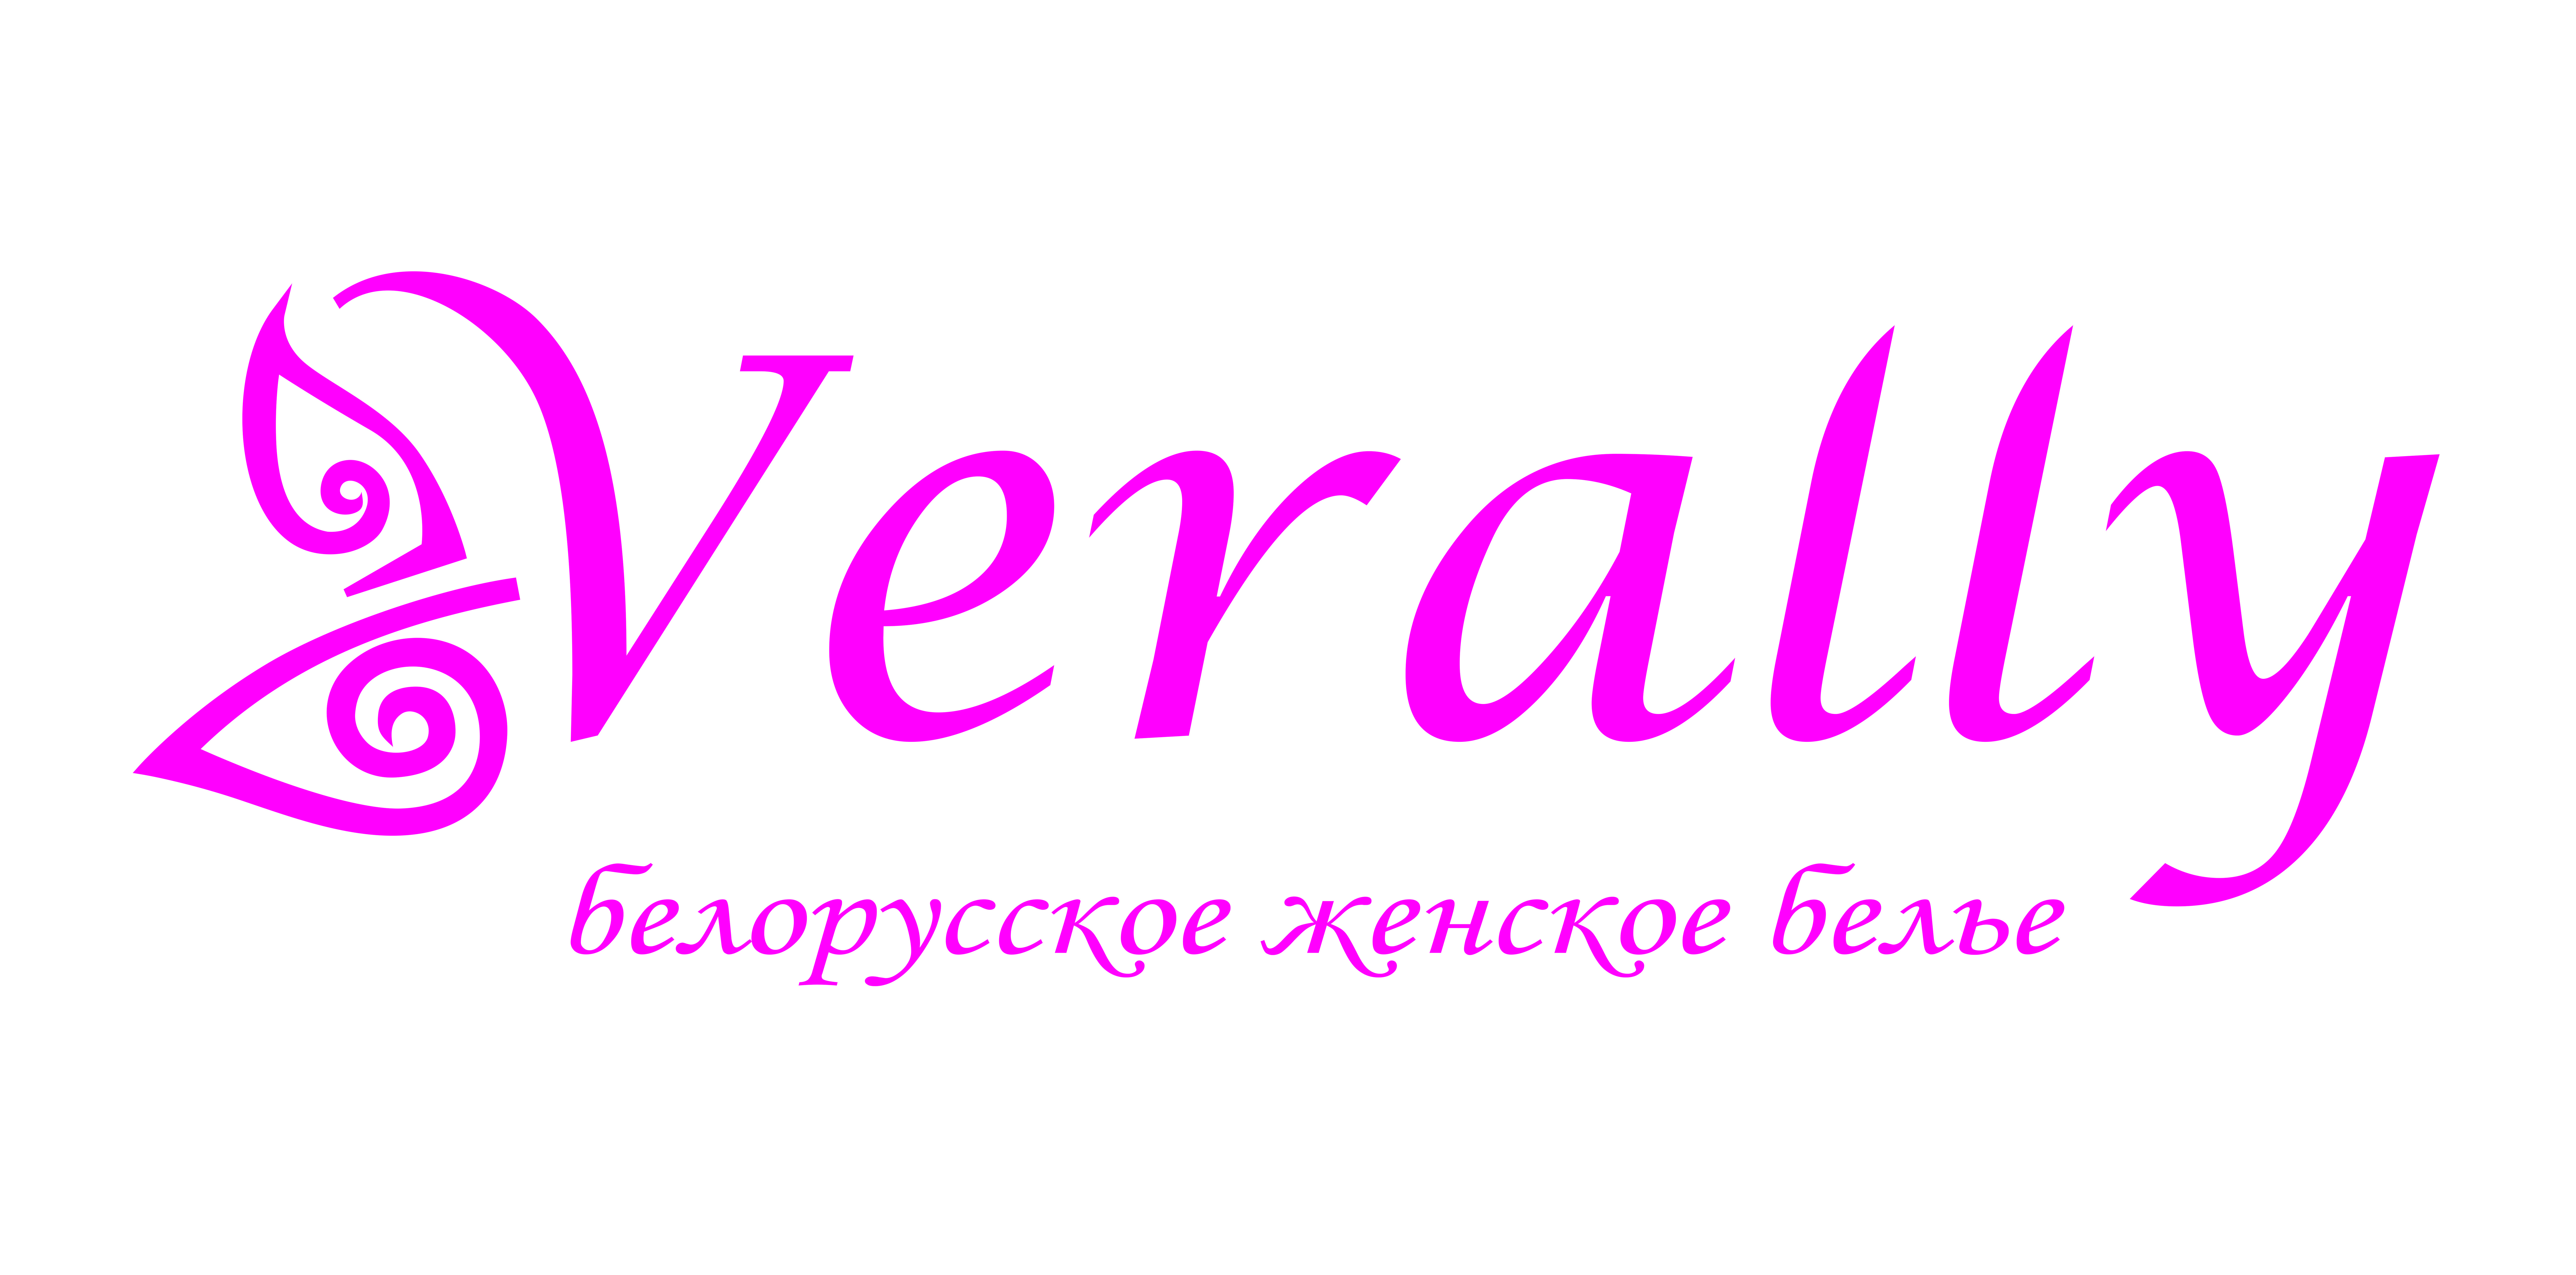 Verally 